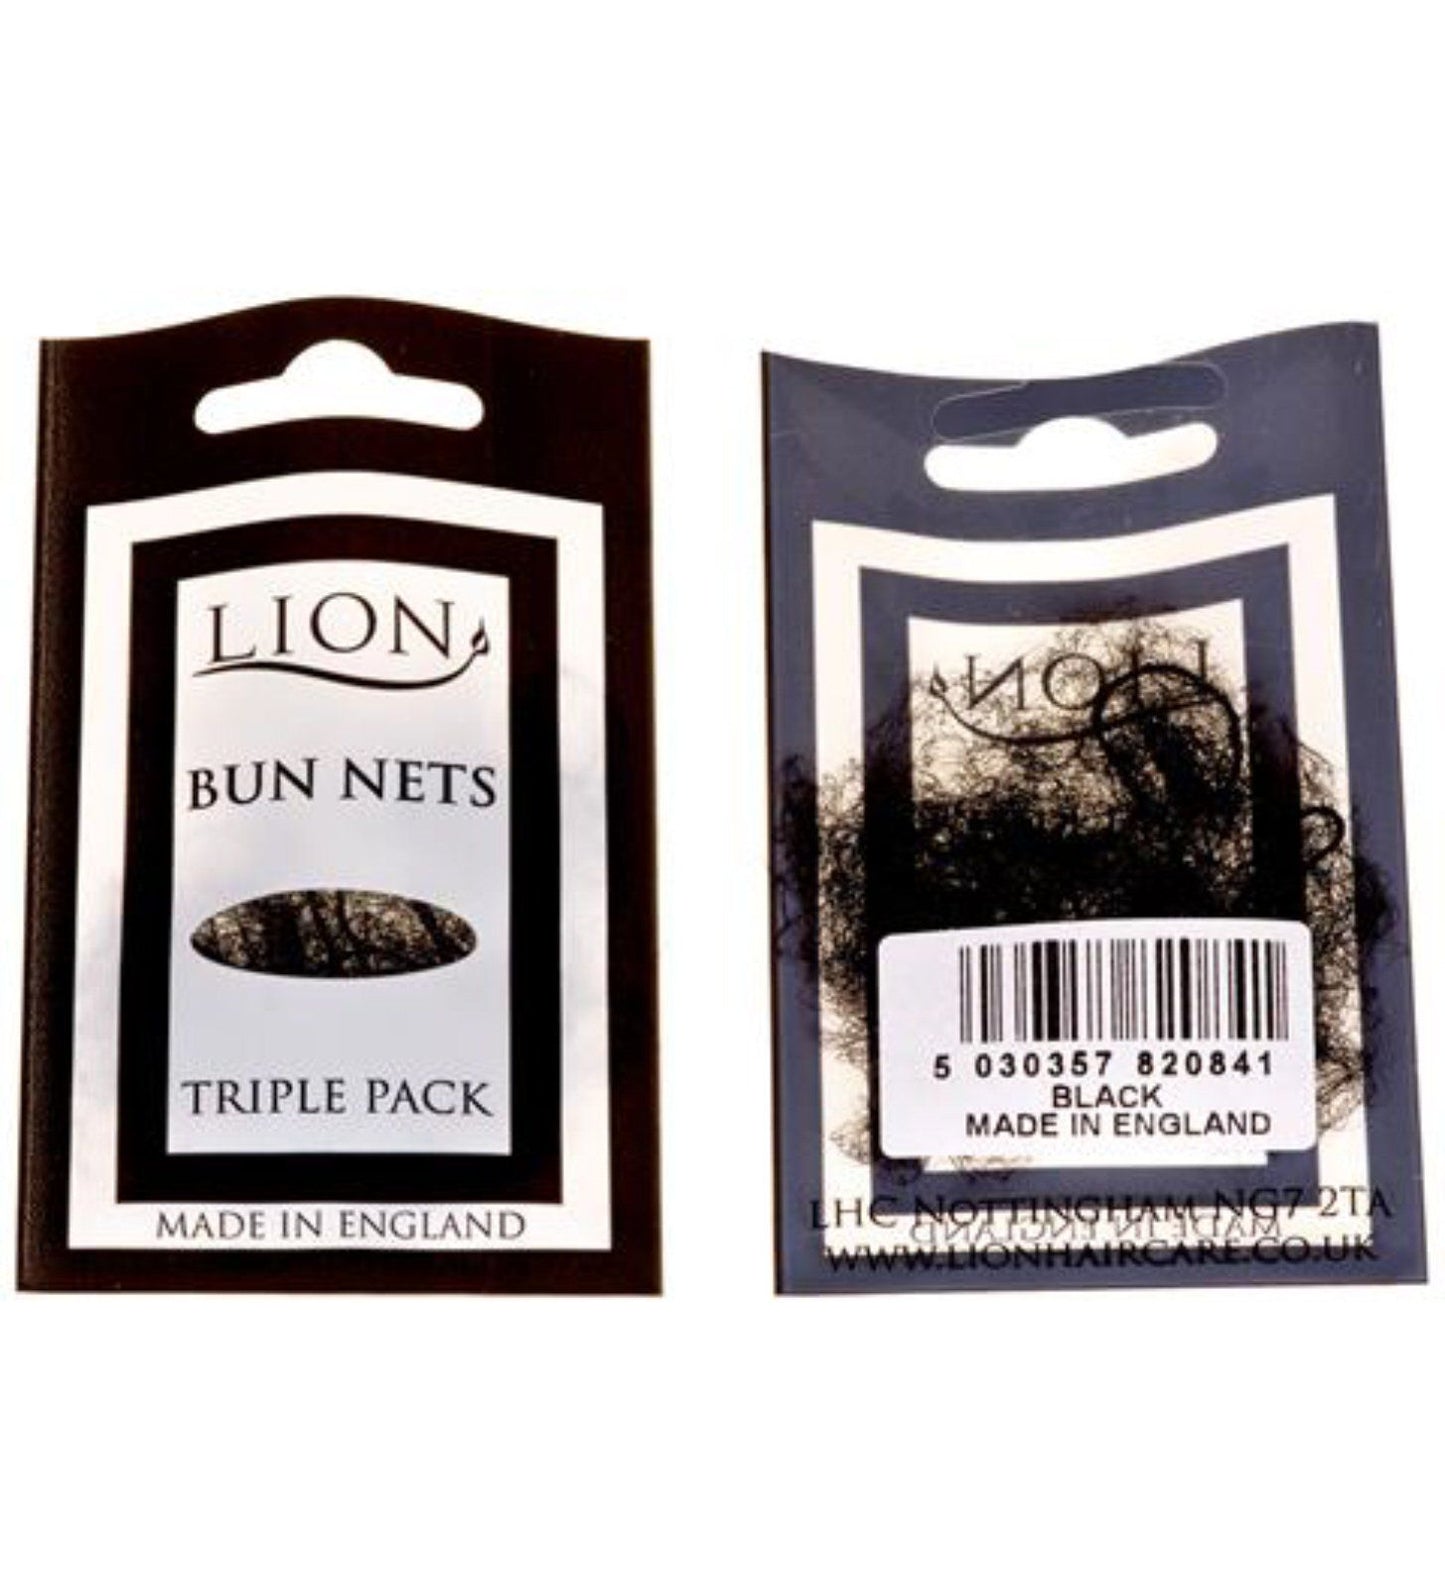 BUN NETS - PACK OF 3 Accessories Lion Black 